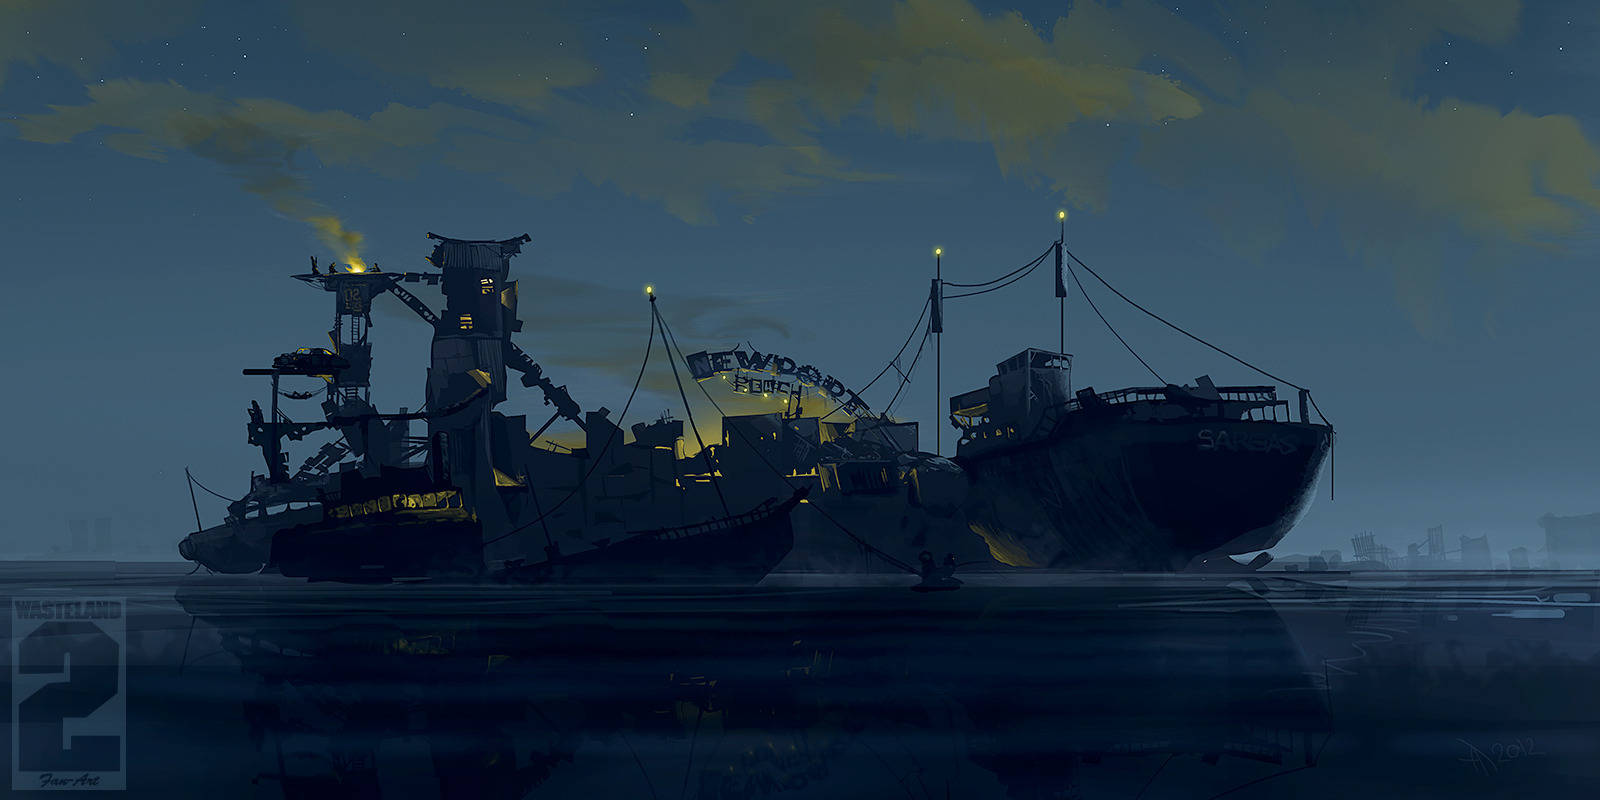 Wasteland Soldier's Ship